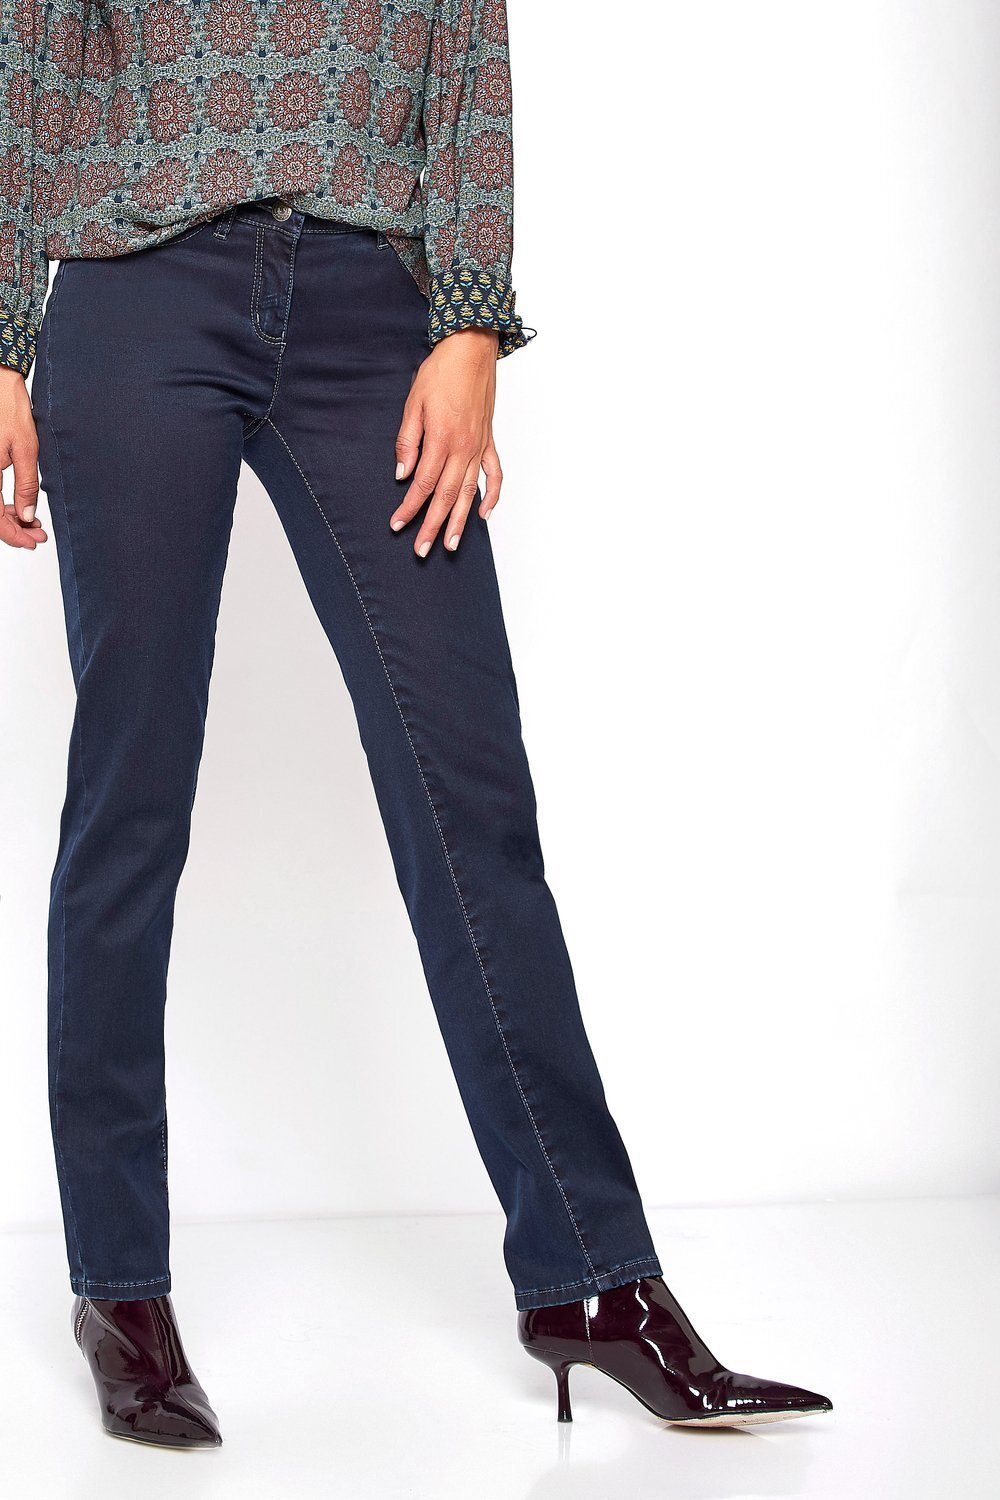 Perfect 5-Pocket-Jeans darkblue und 058 Shape mit an - Bauch TONI Shaping-Effekt Po